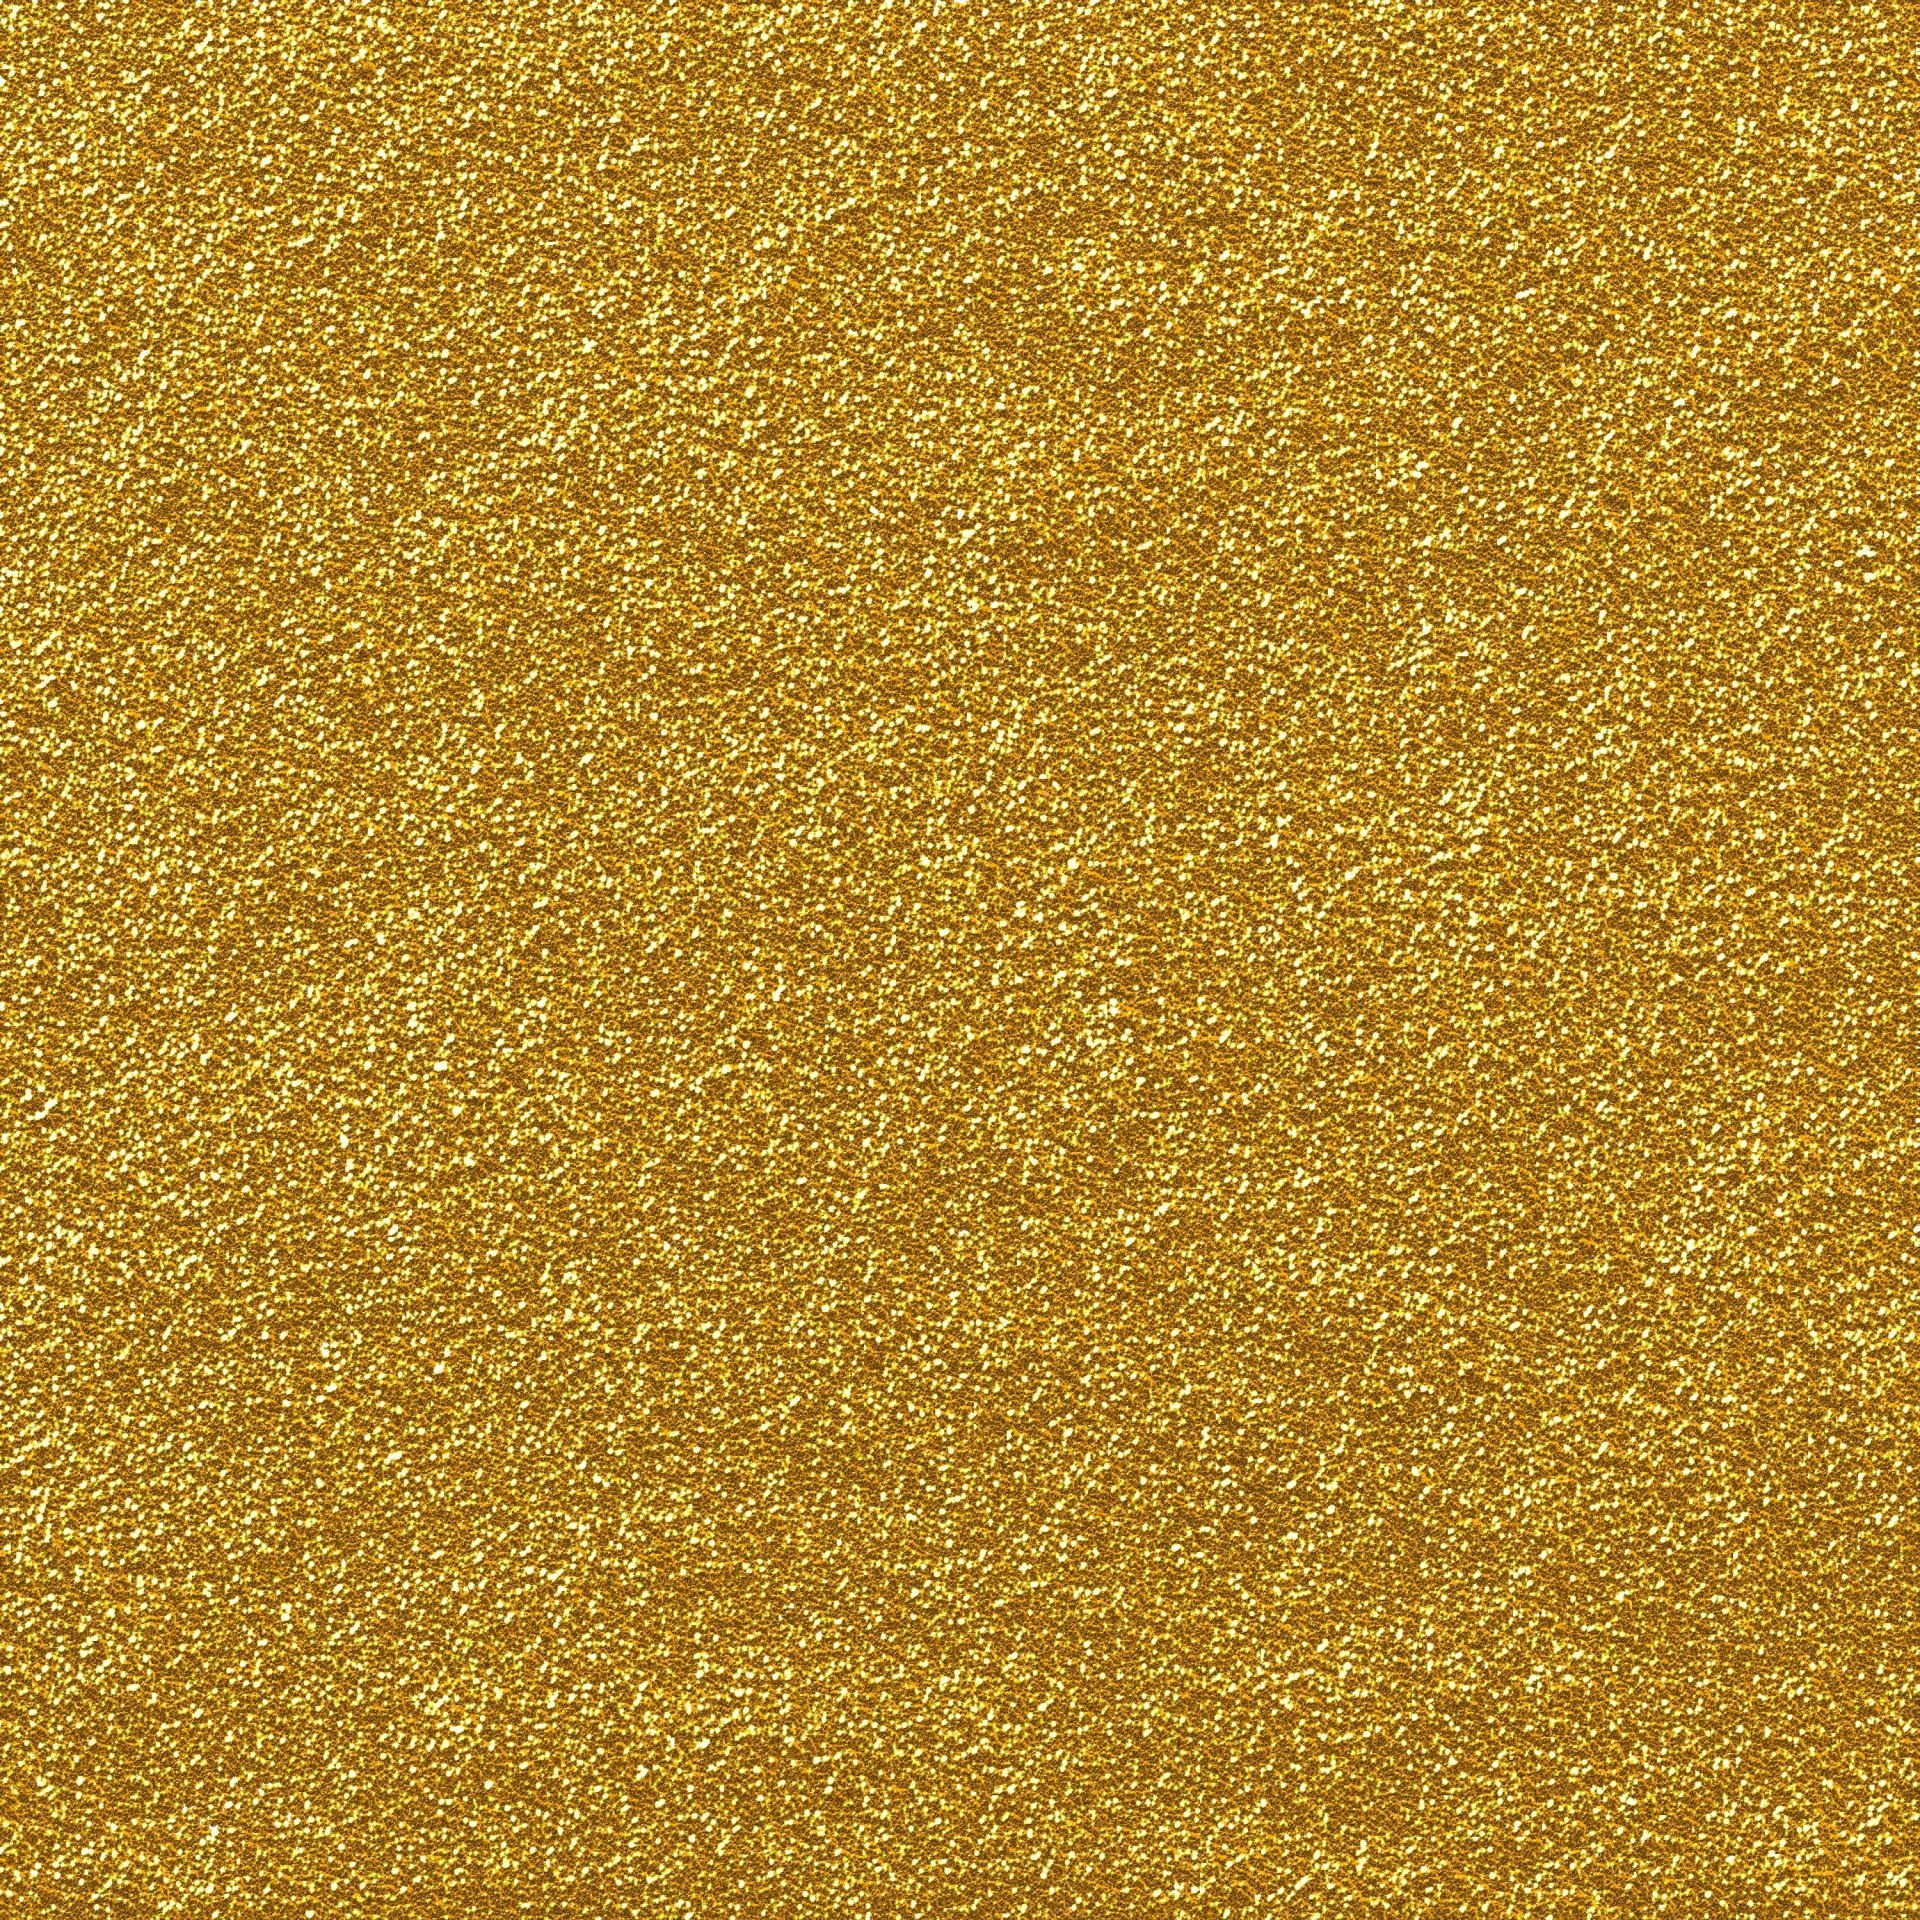 Metallic Gold Glitter Texture Stock Photo HD Public Domain